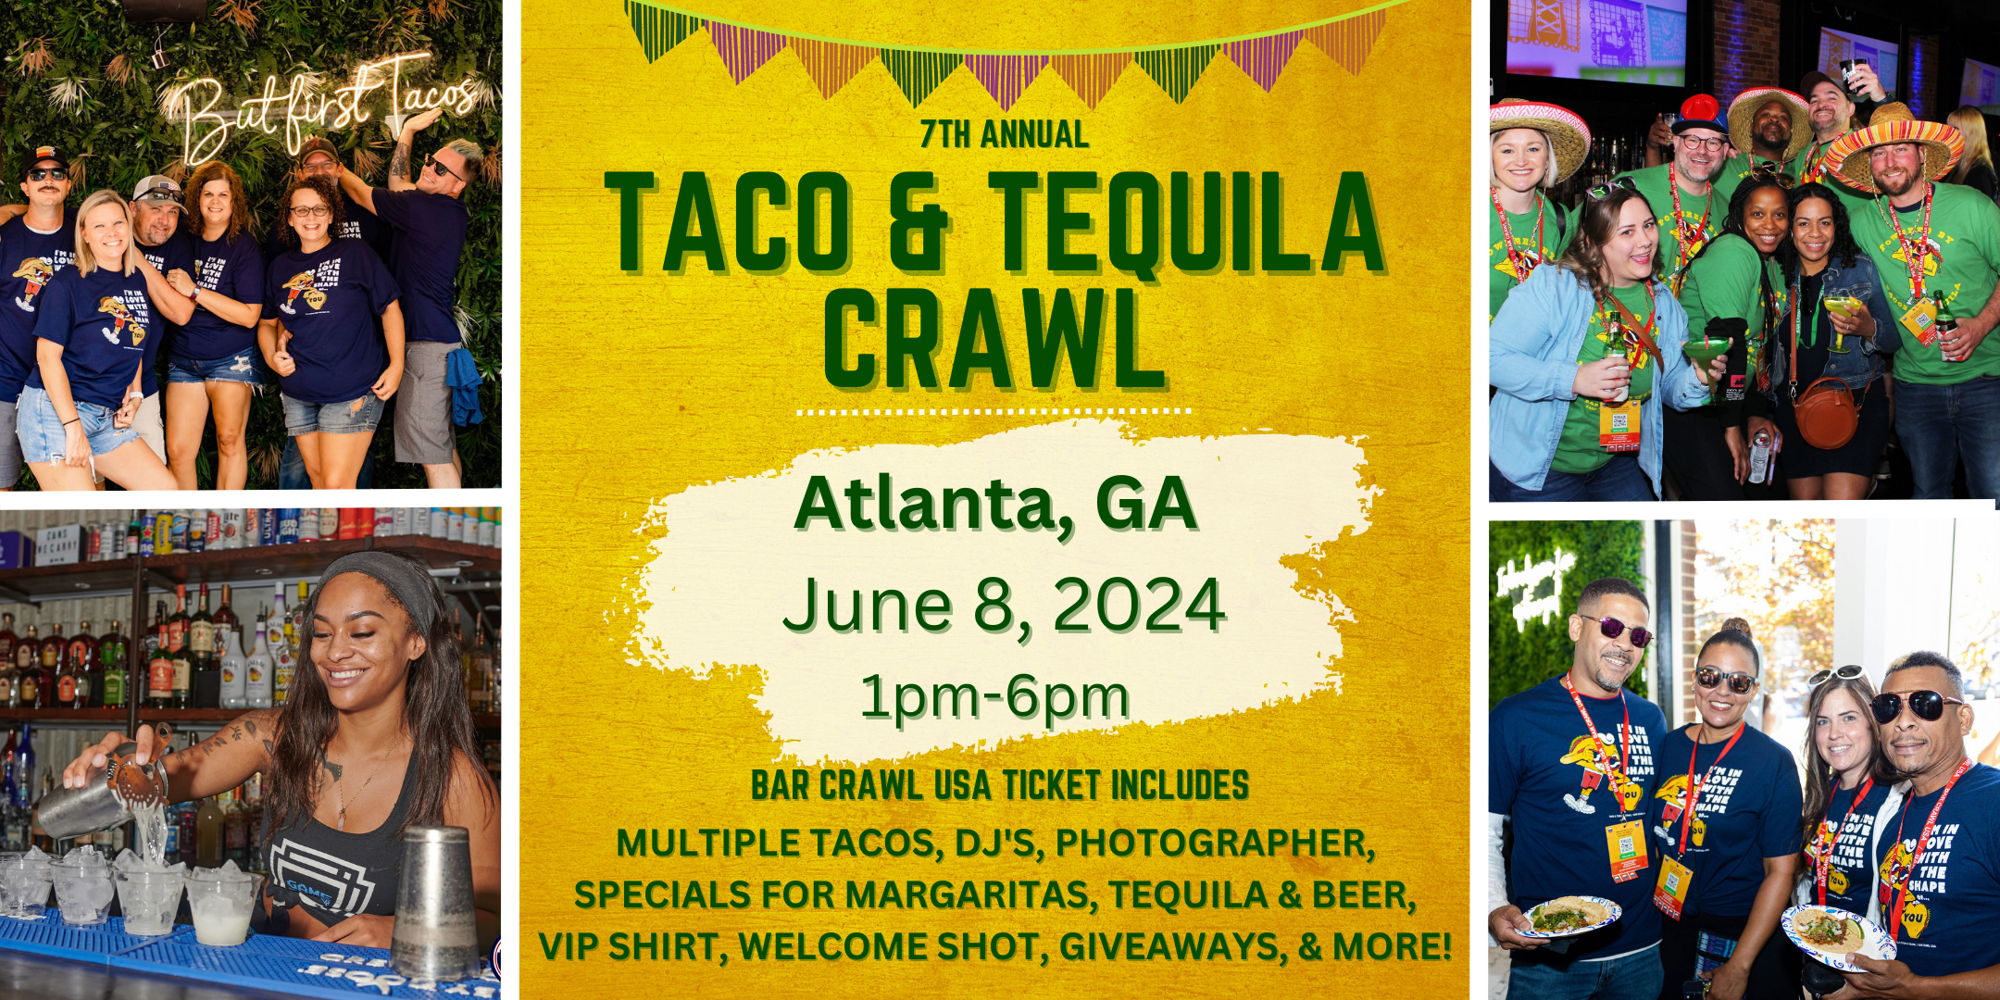 Atlanta Taco & Tequila Bar Crawl: 7th Annual promotional image